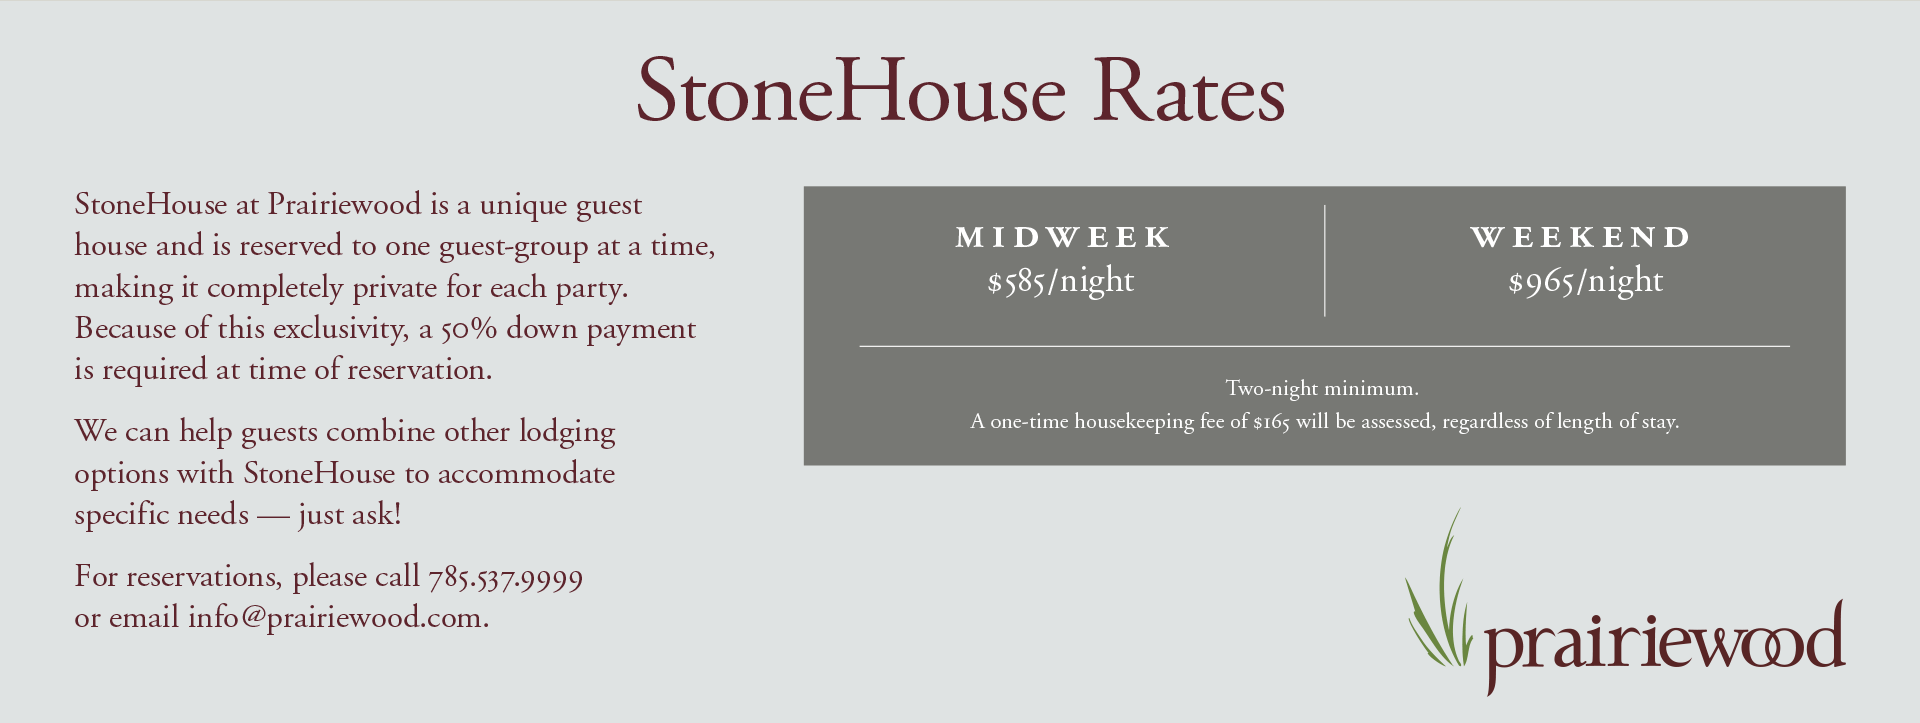 StoneHouse Rates